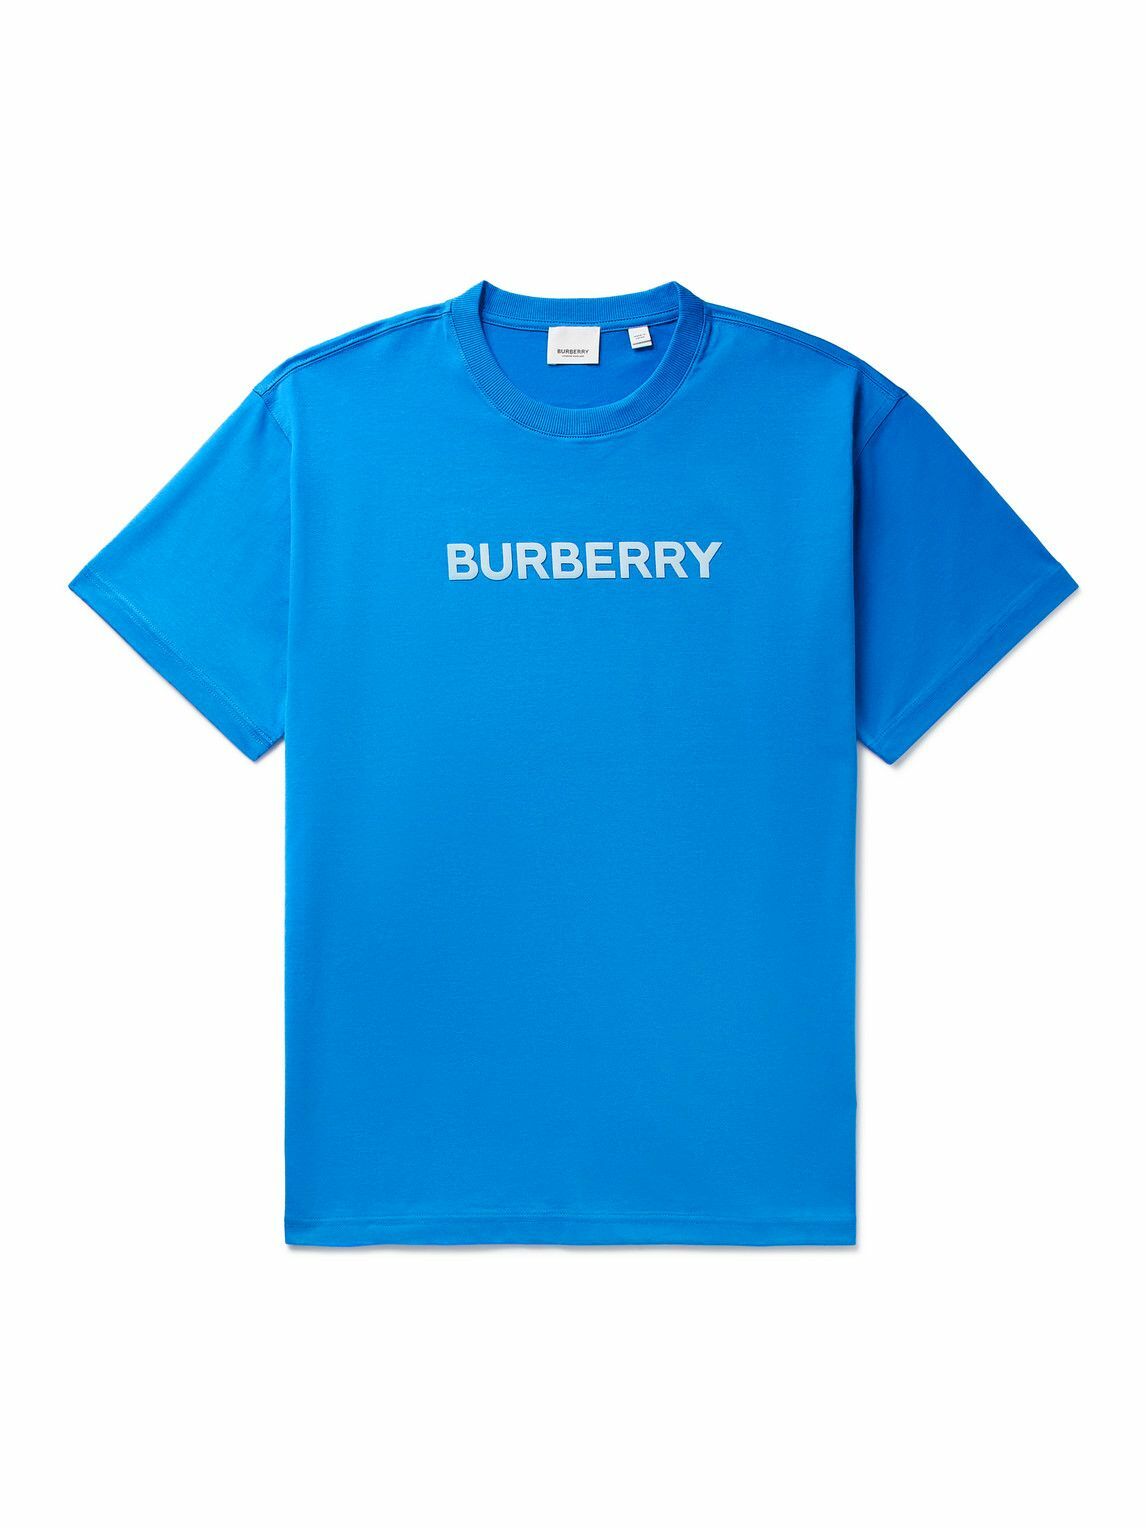 Burberry - Logo-Print Cotton-Jersey T-Shirt - Blue Burberry